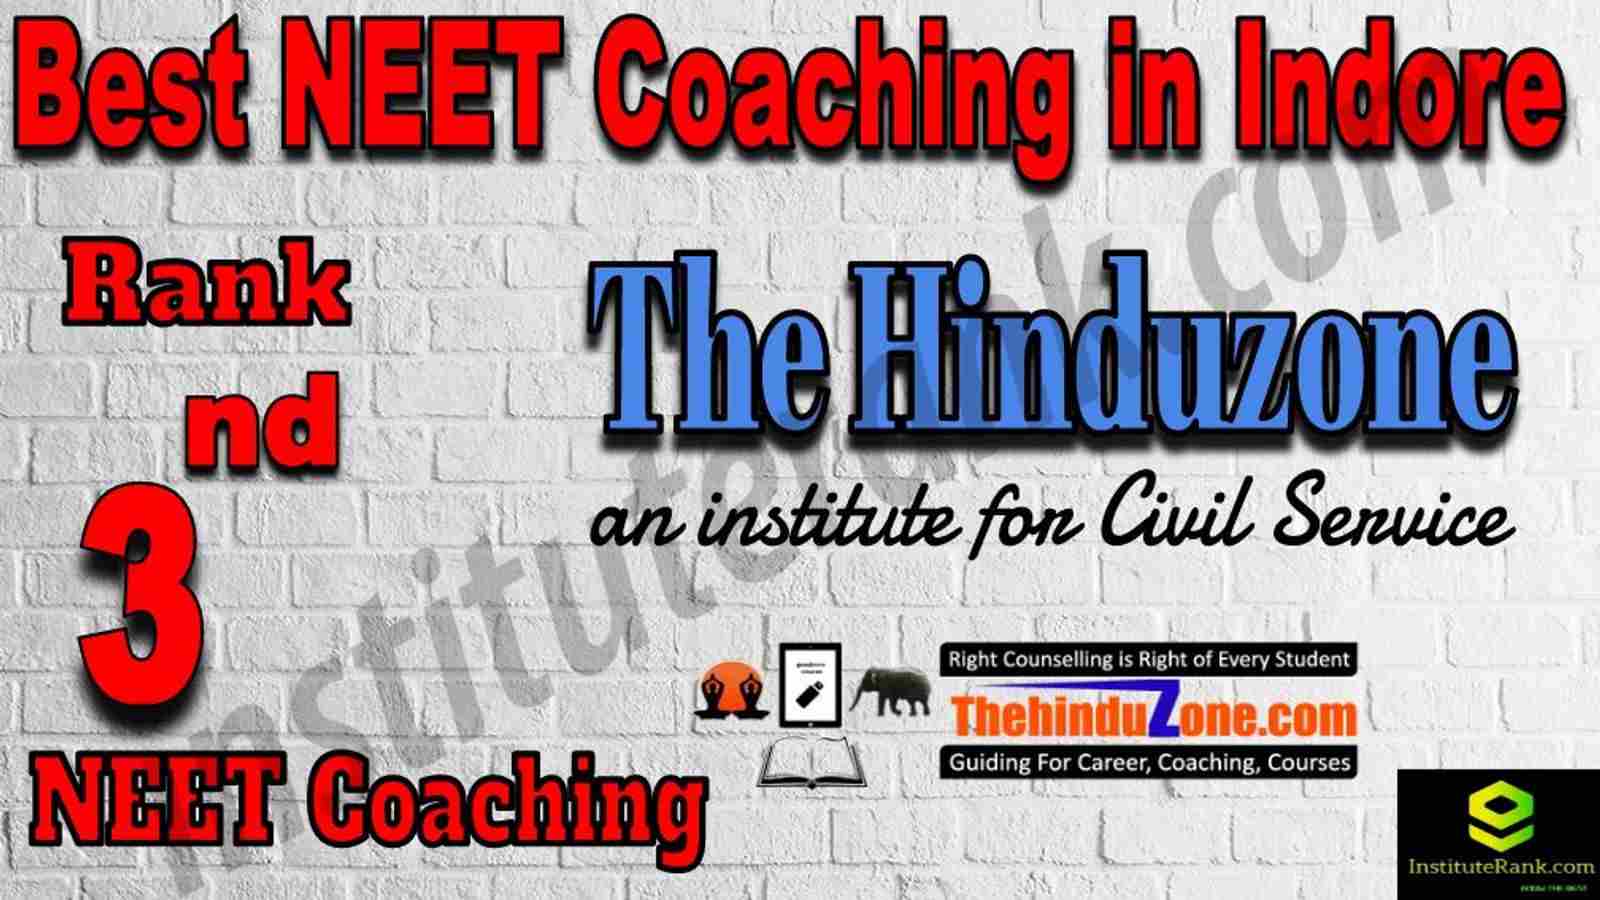 3rd Best Neet Coaching in Indore